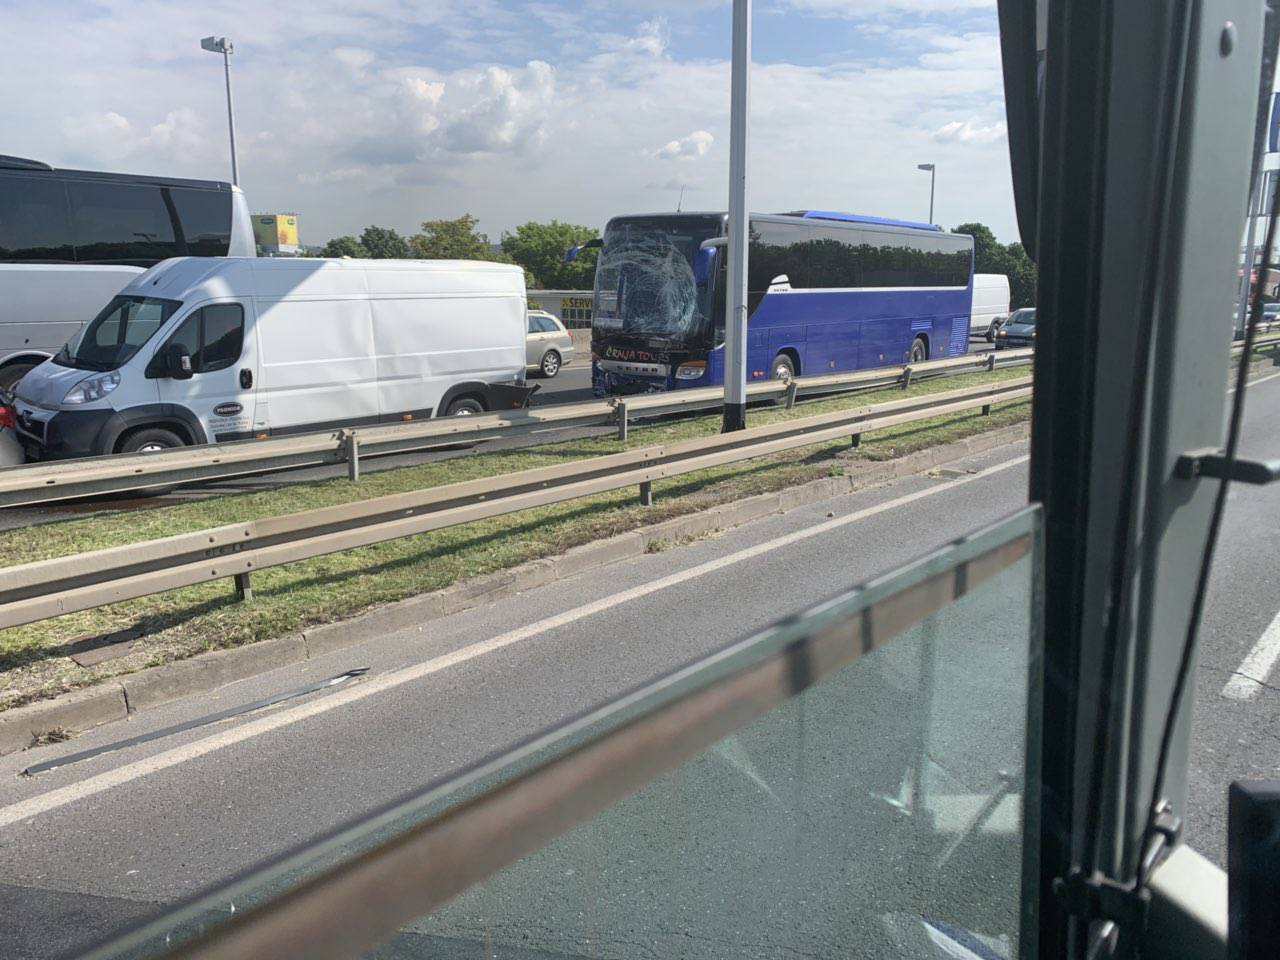 Kaos u Zagrebu: Bus udario u kombi i 'pomeo' još pet vozila